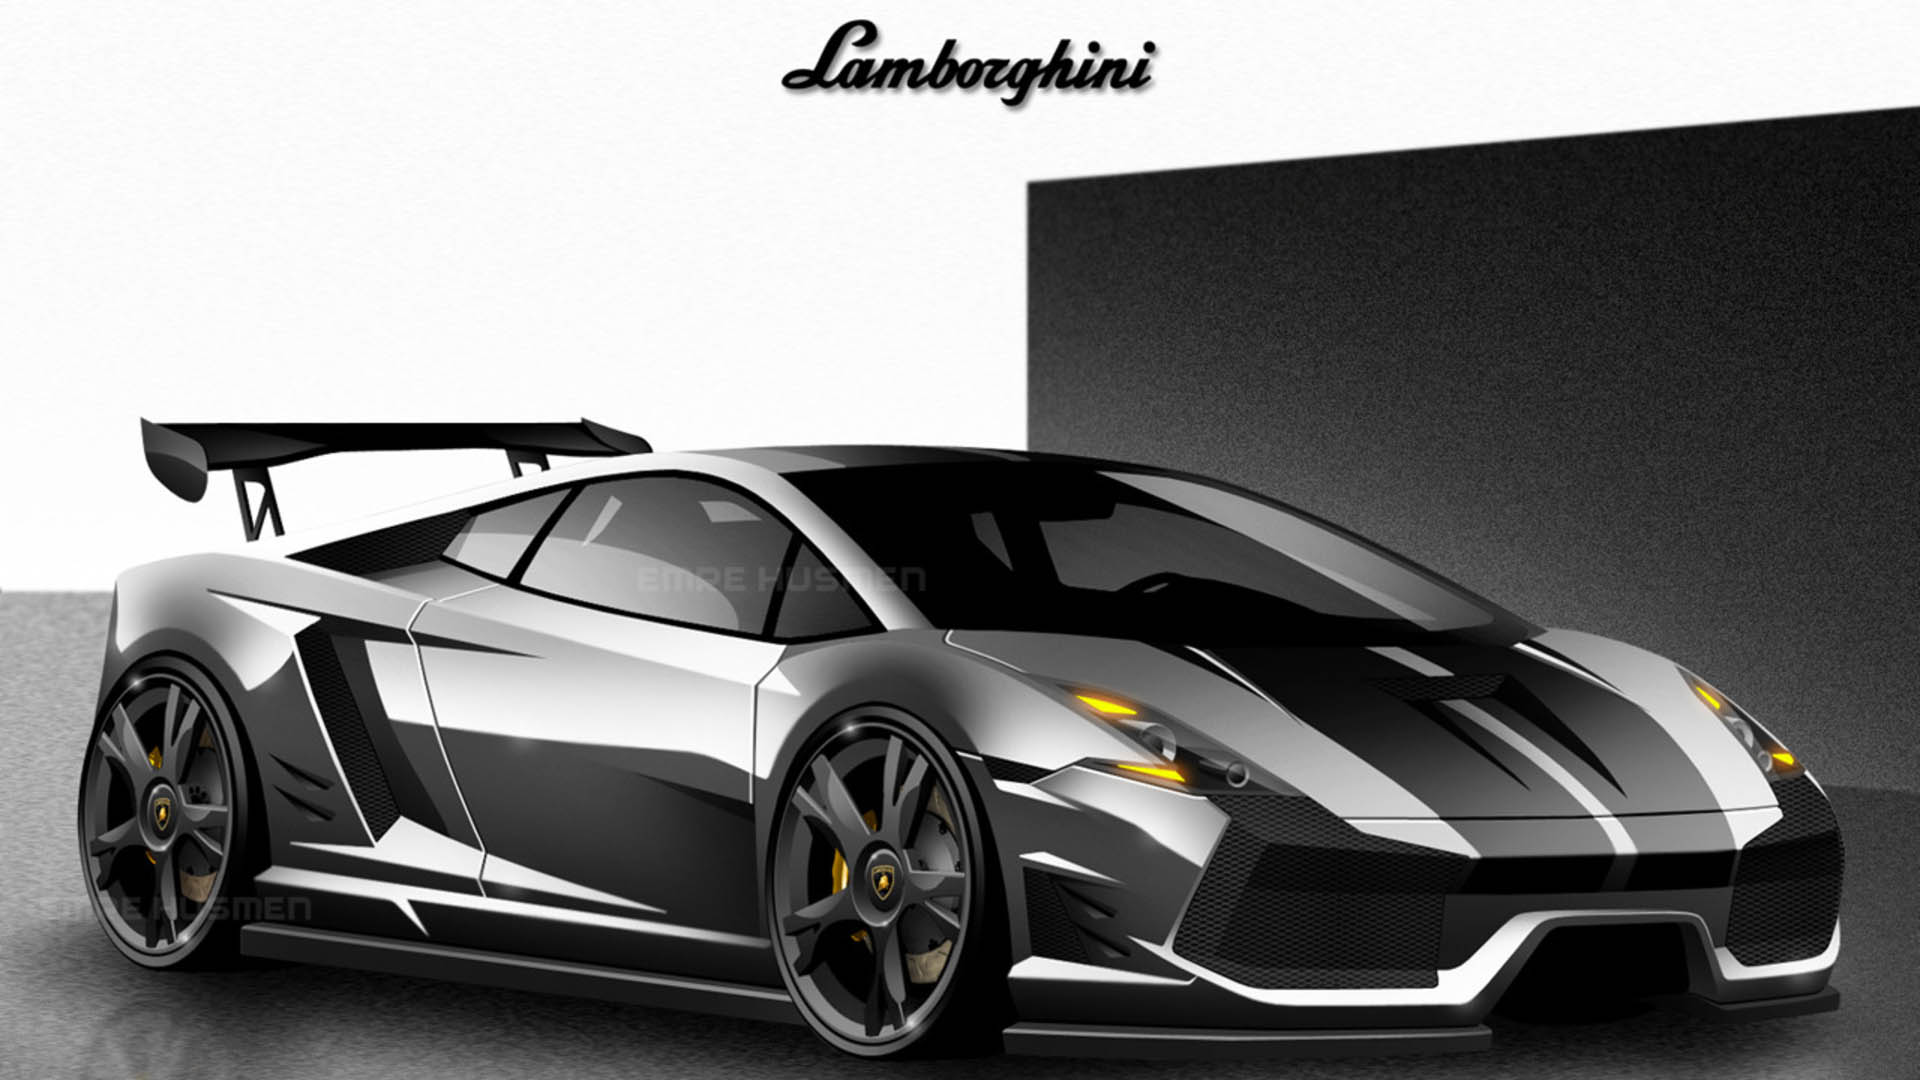 Lamborghini Wallpaper High Quality